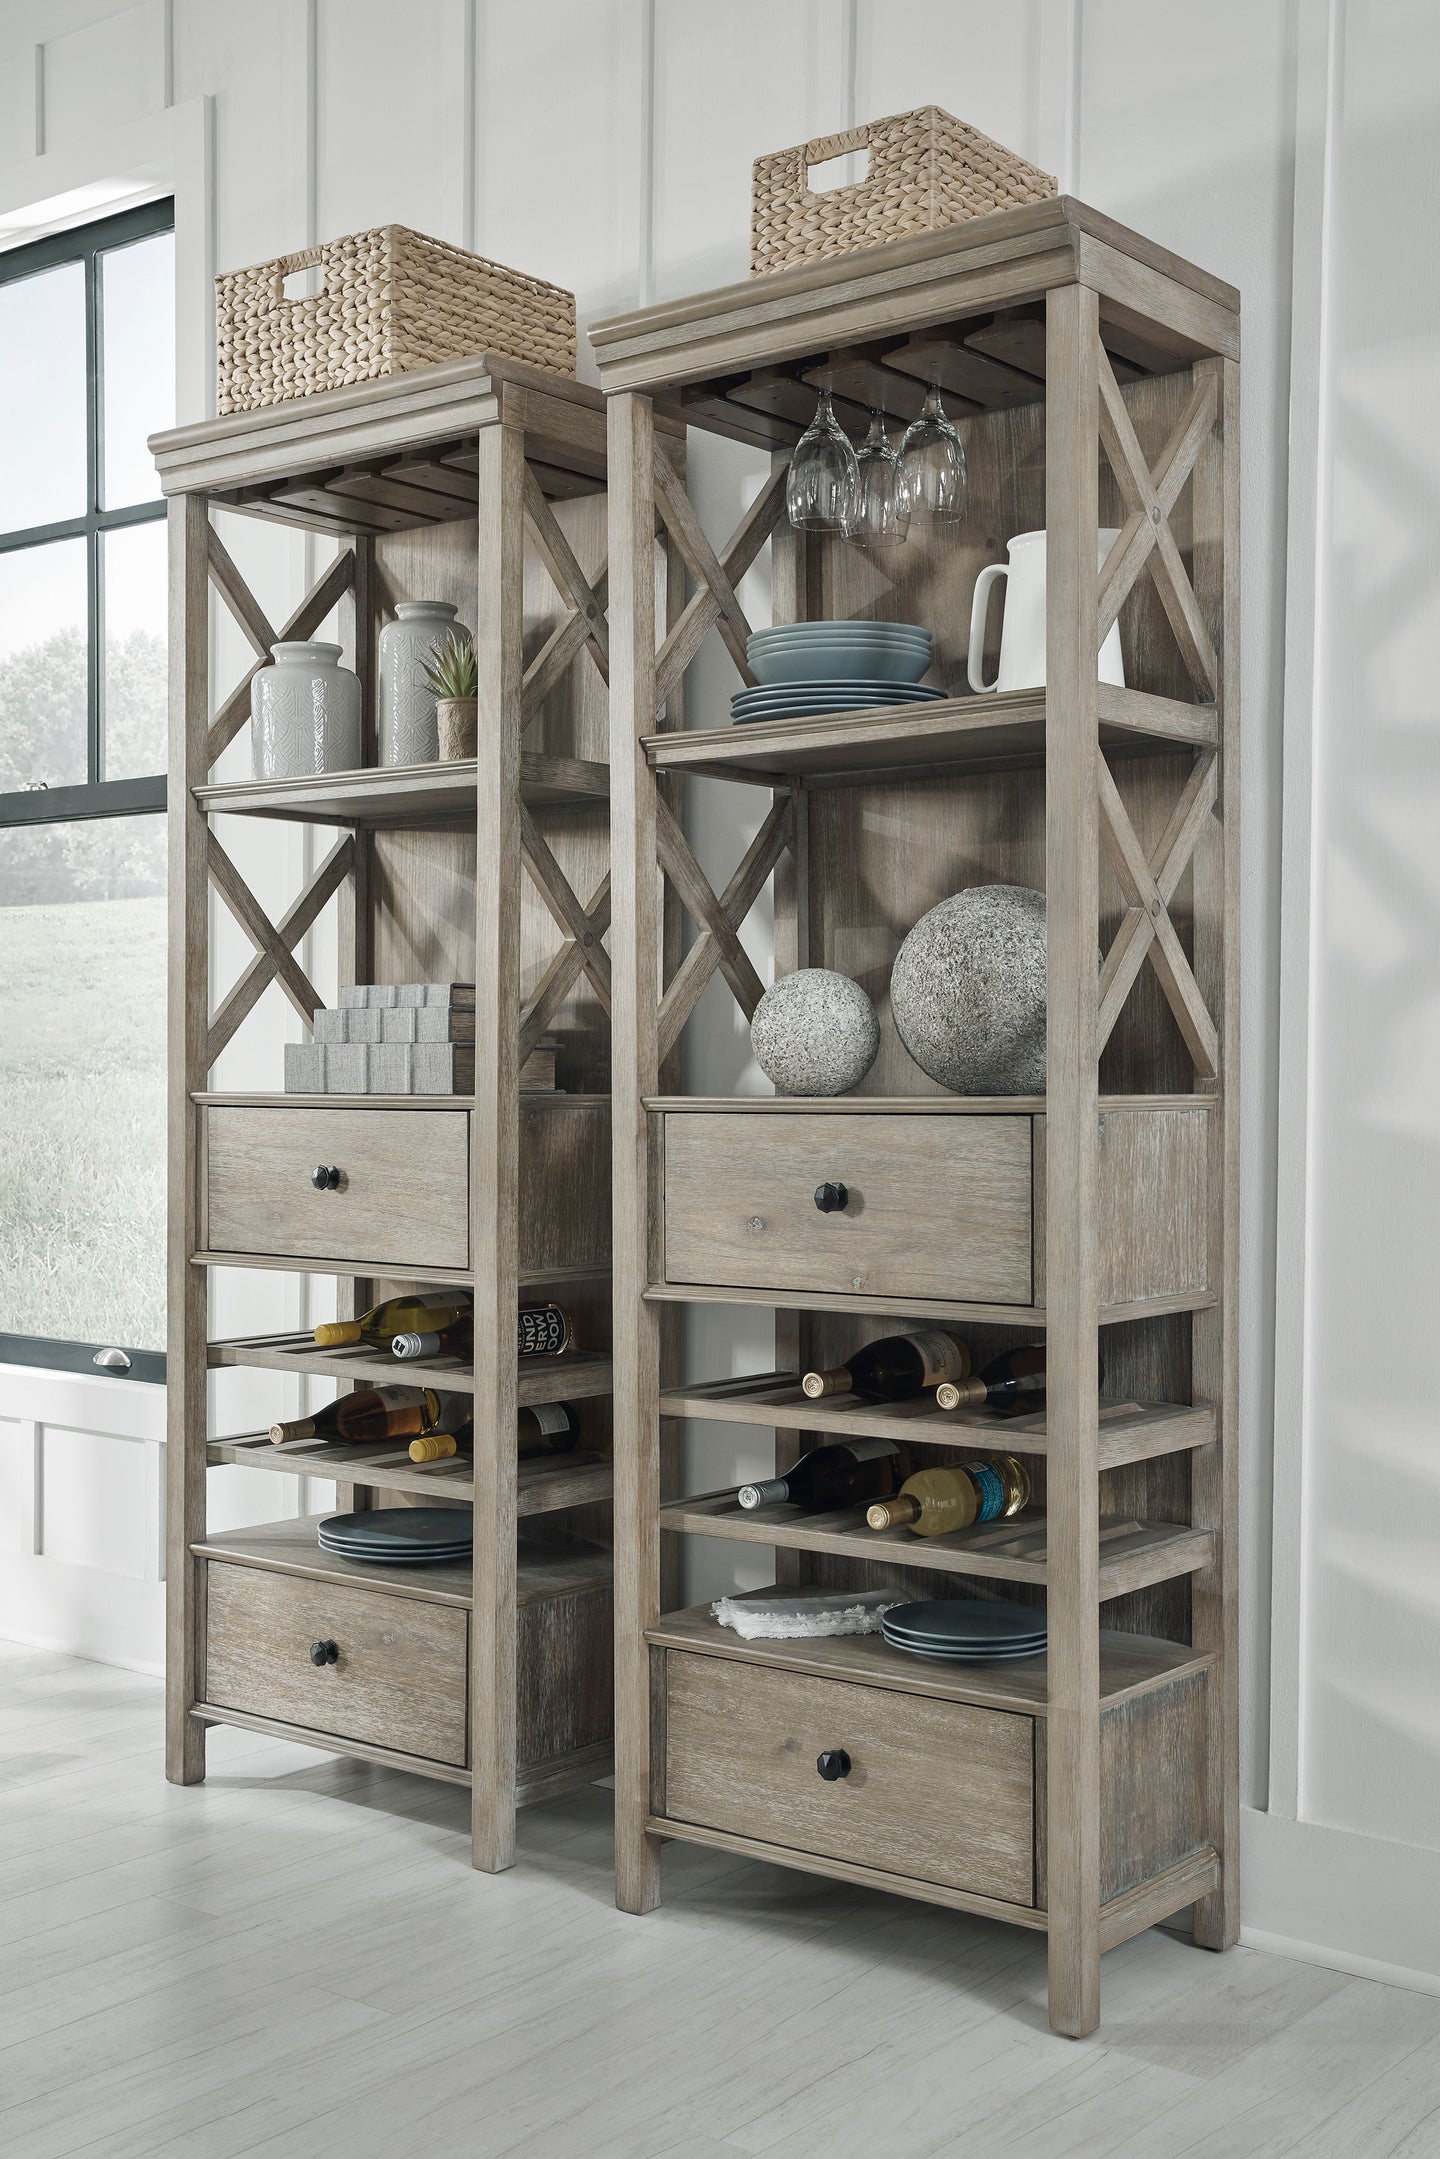 Moreshire Display Cabinet - Furniture Depot (7784155611384)